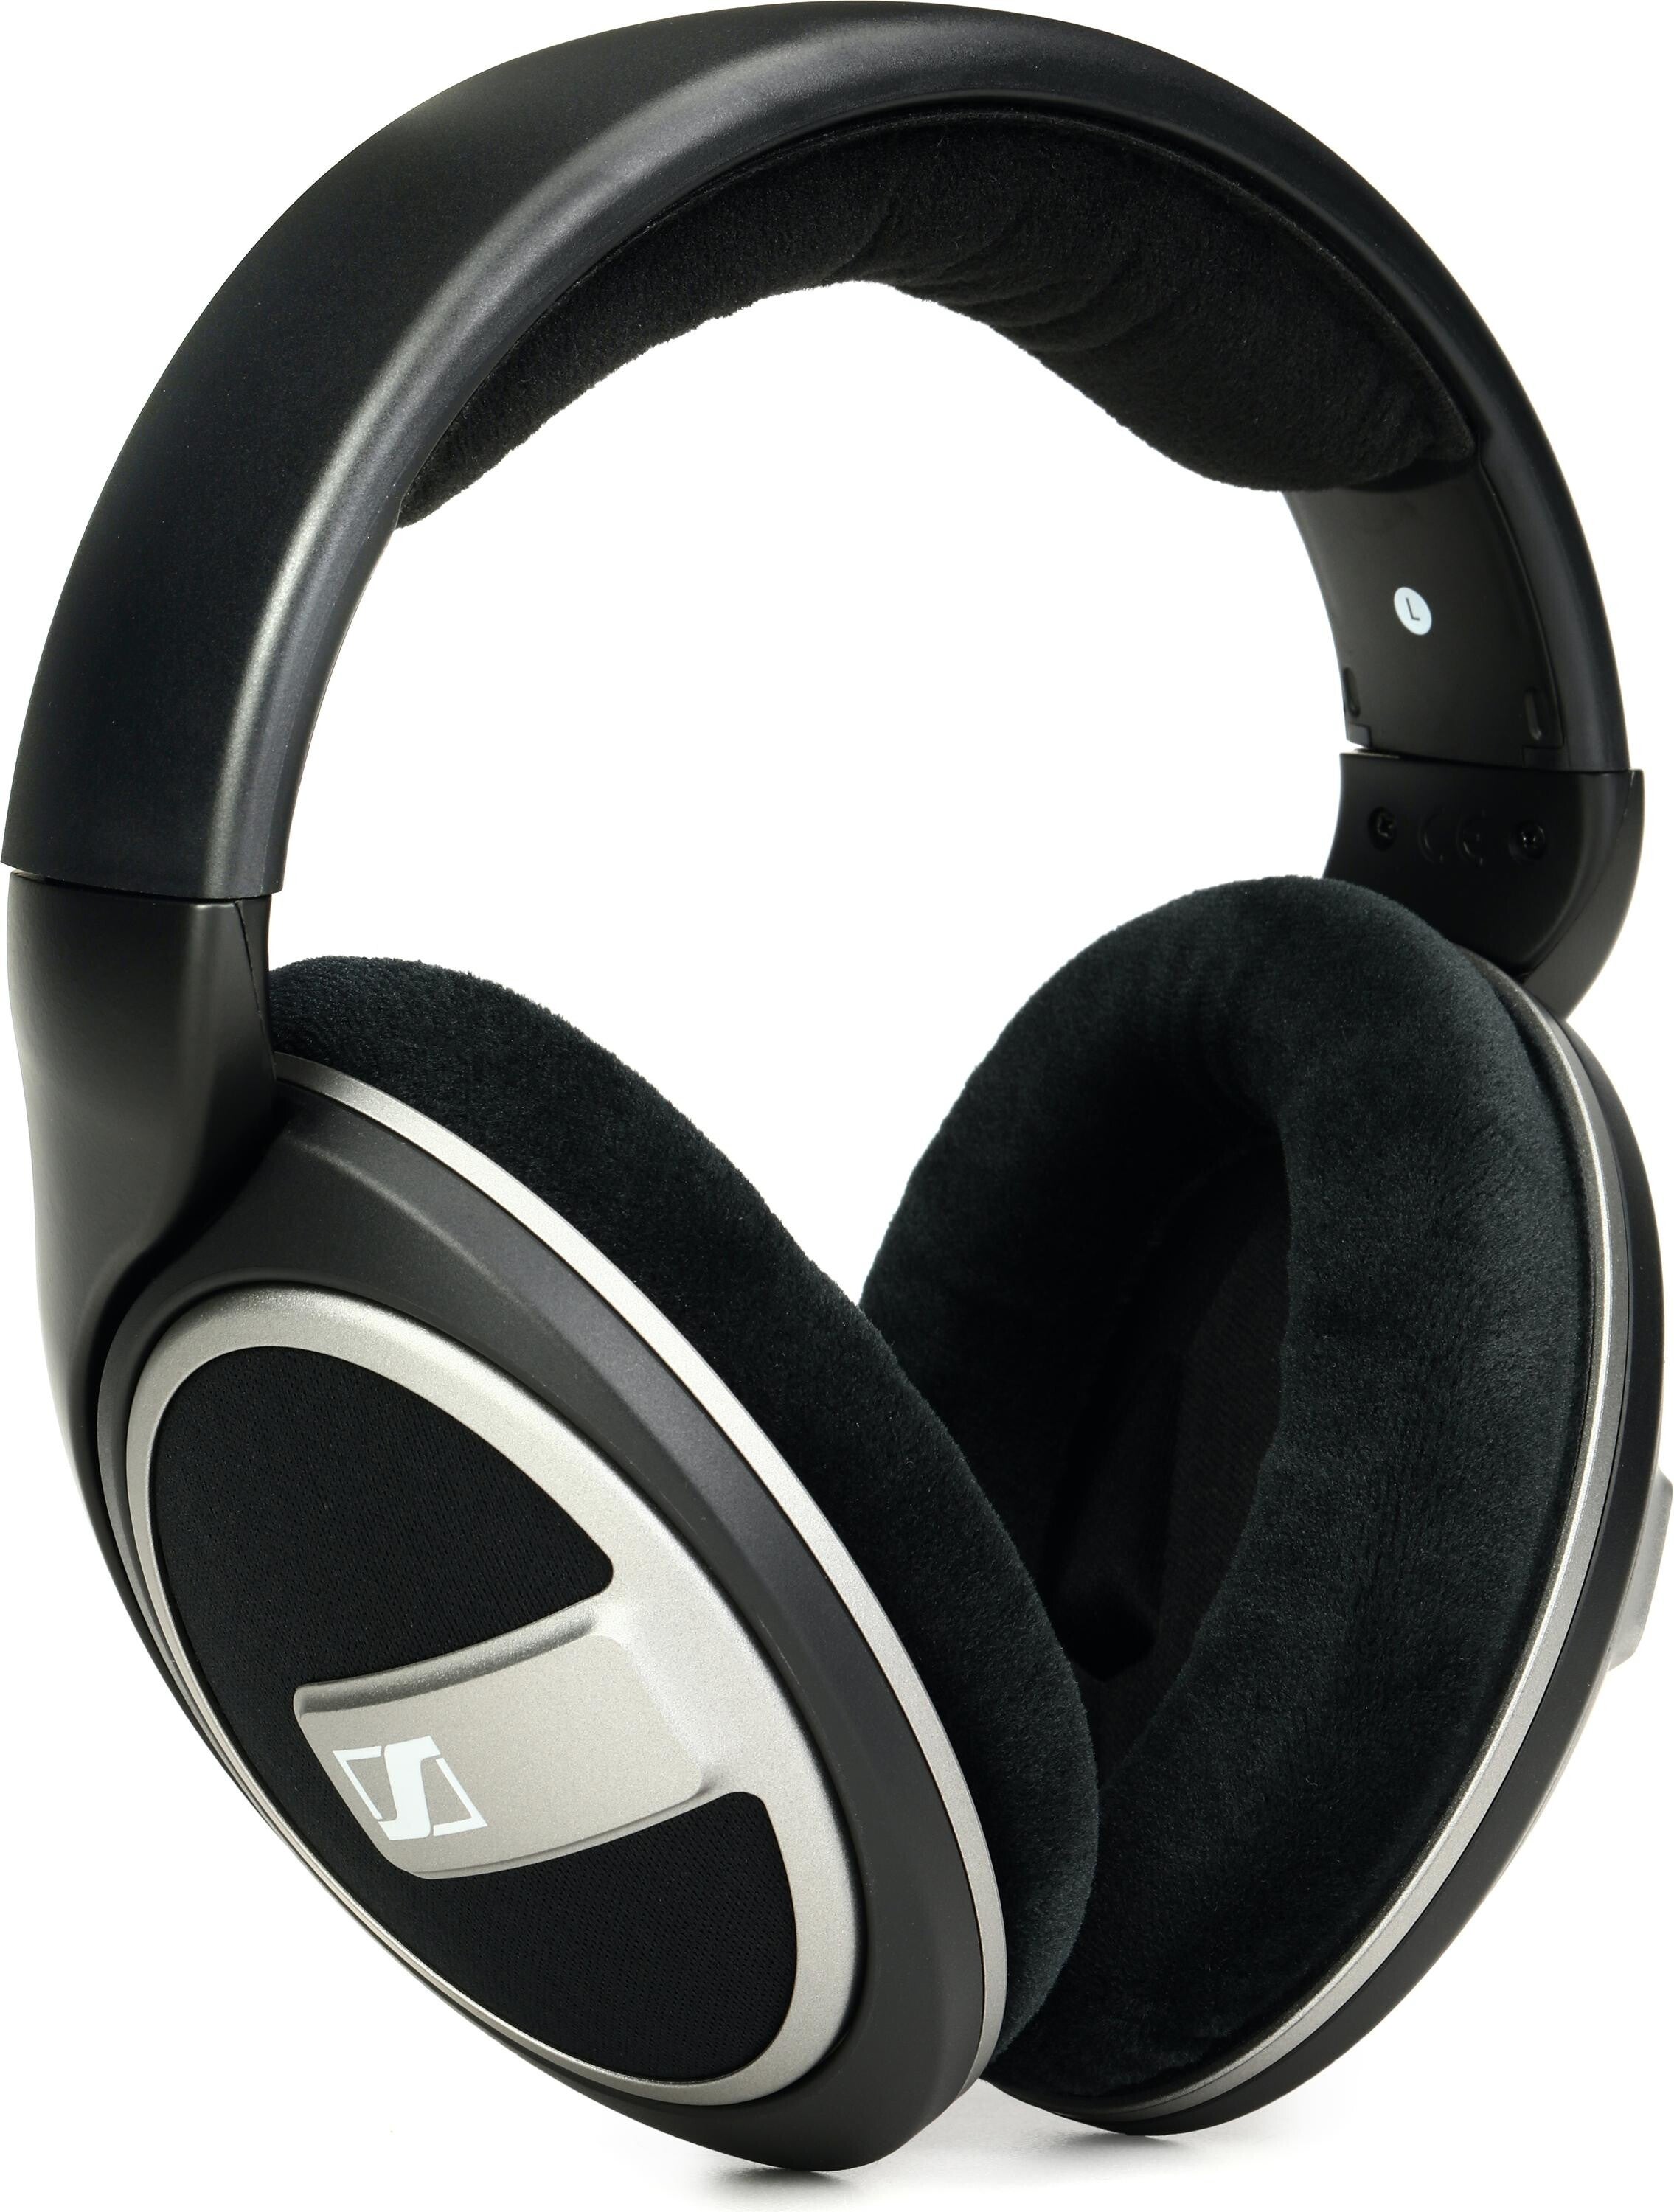 Sennheiser HD 559 Open-back Around-ear Headphones